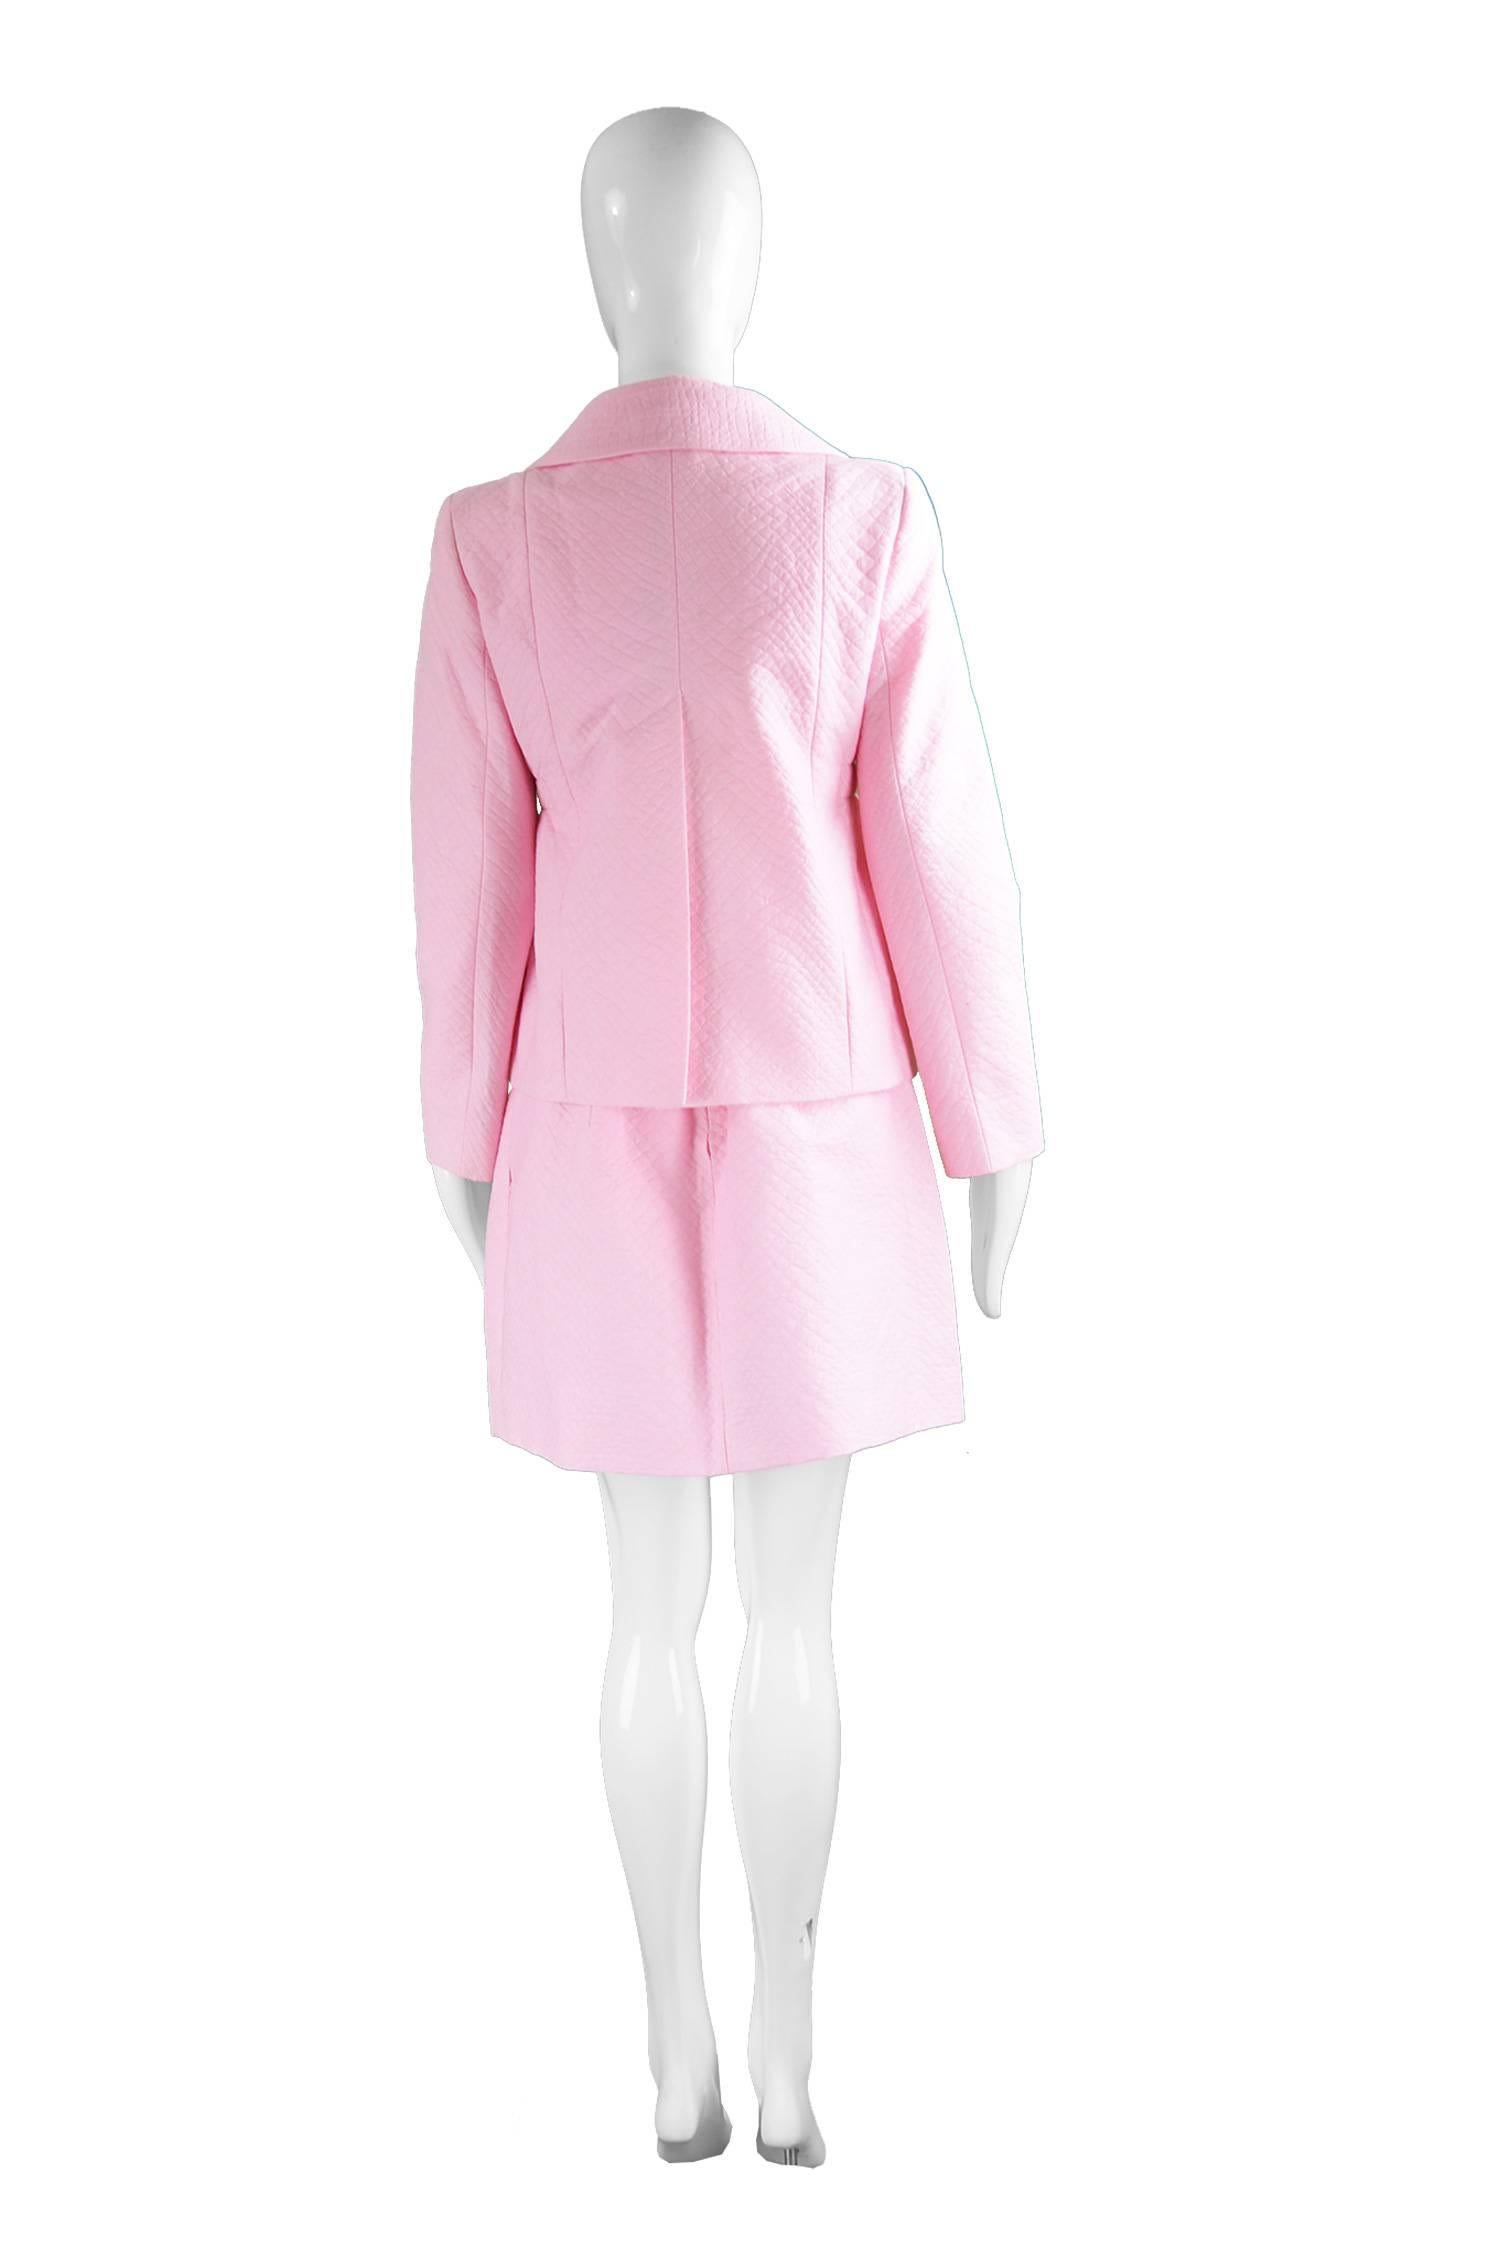 Unworn Carven Paris Baby Pink Quilted Cotton 2 Piece Jacket & Skirt Suit 1